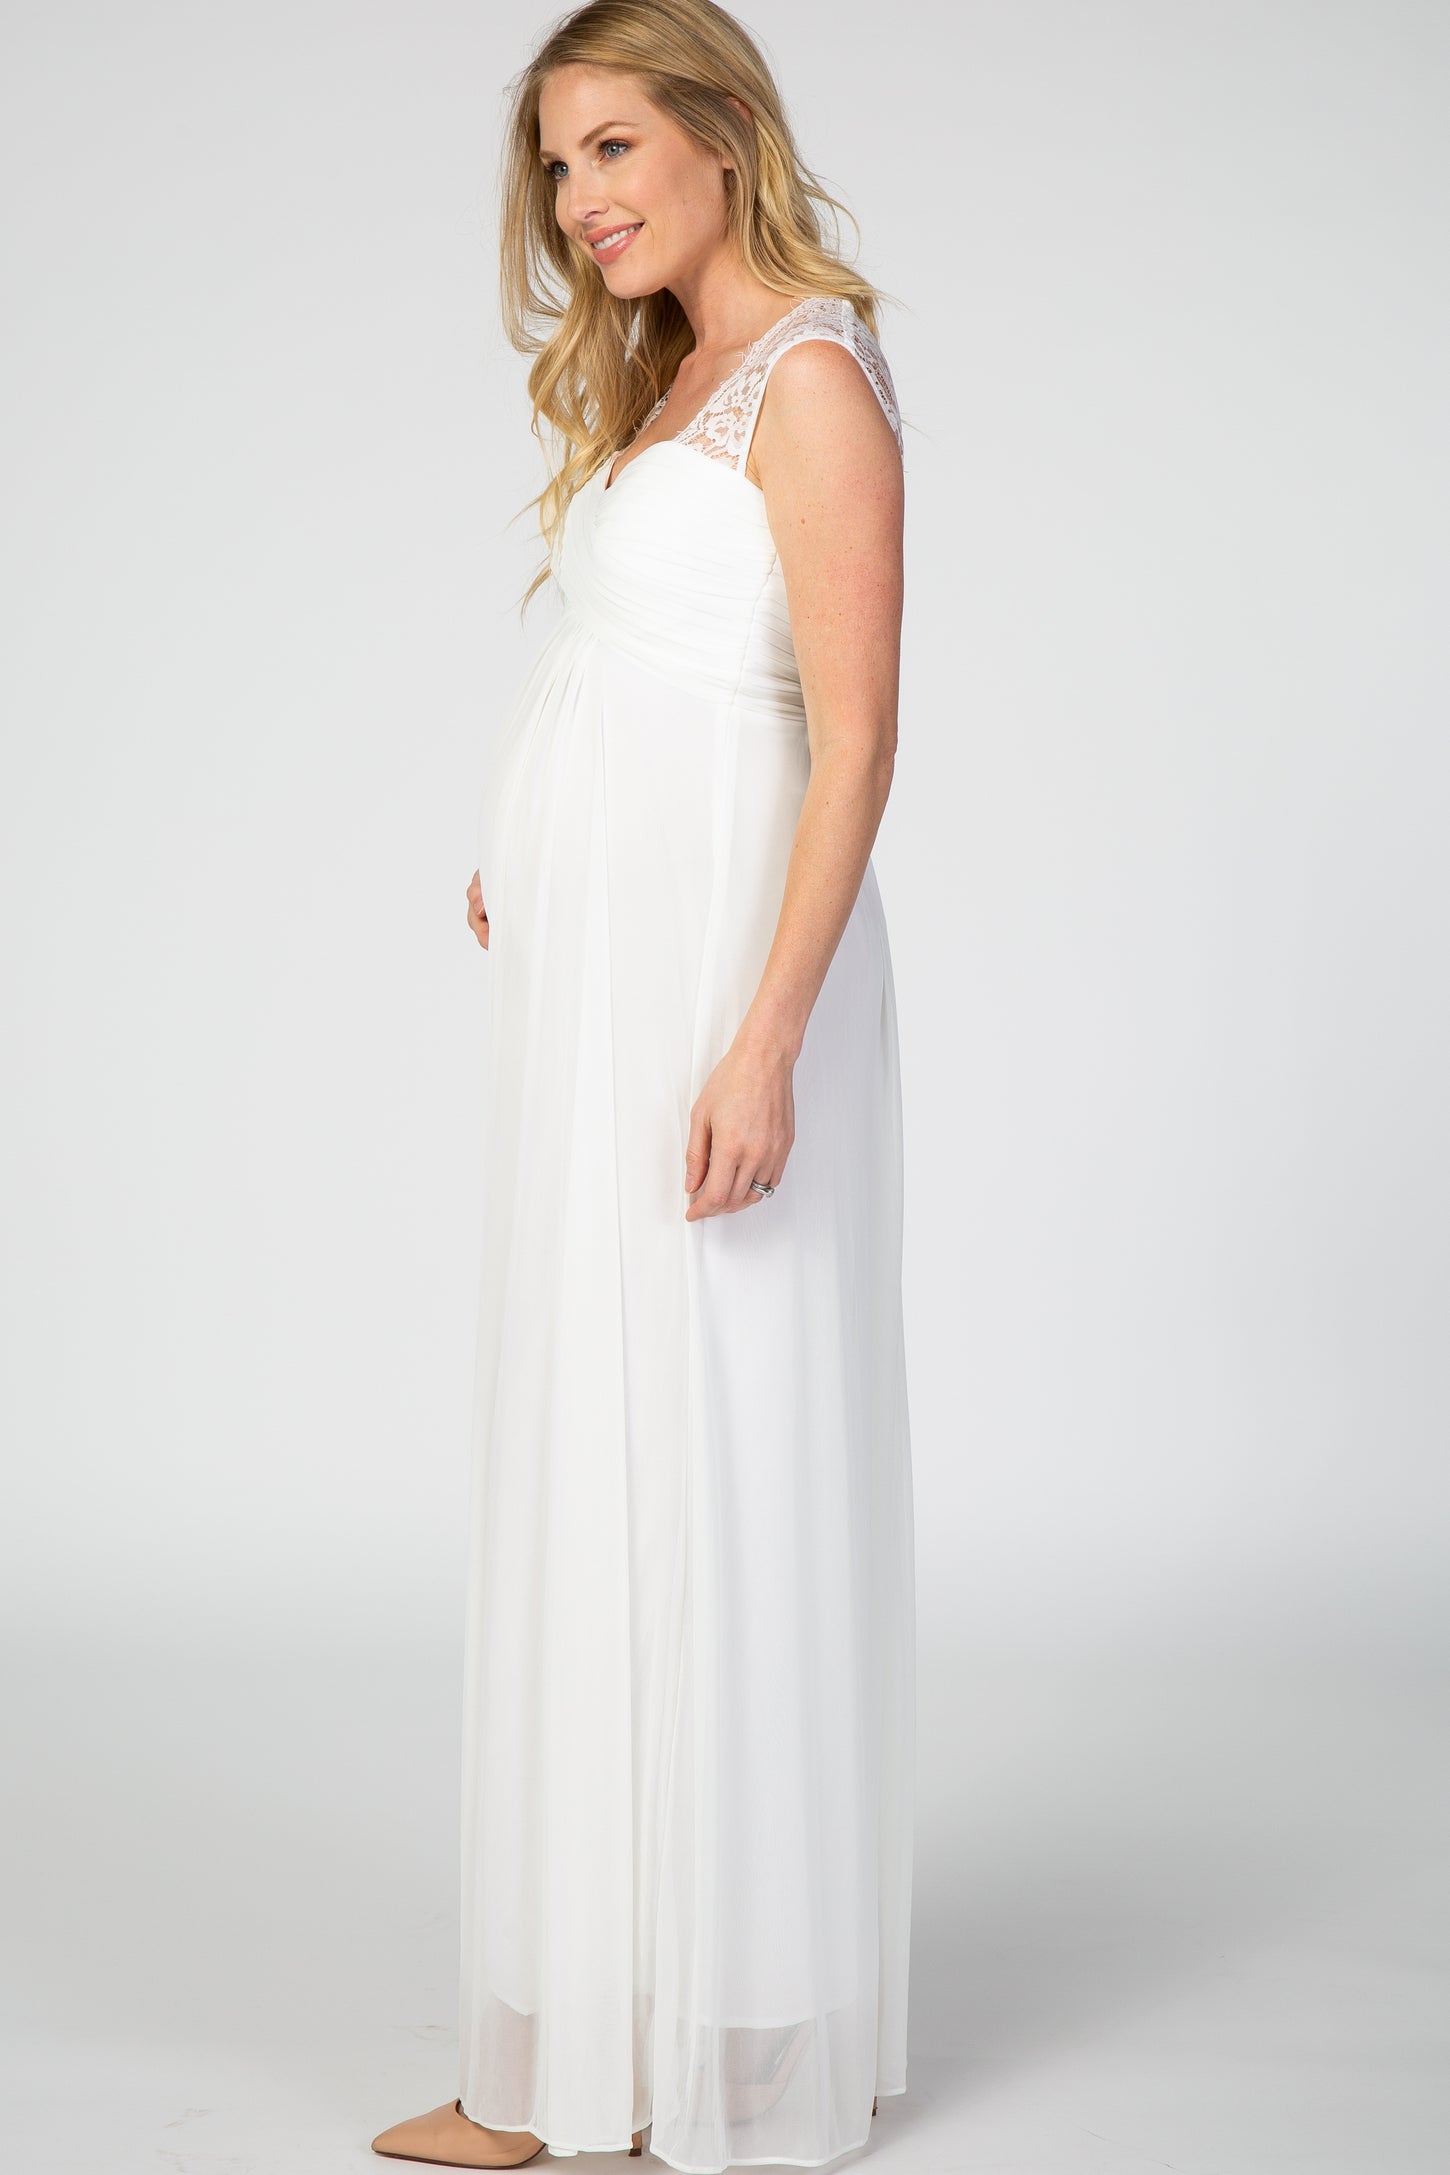 Ivory Lace Accent Chiffon Maternity Evening Gown – PinkBlush